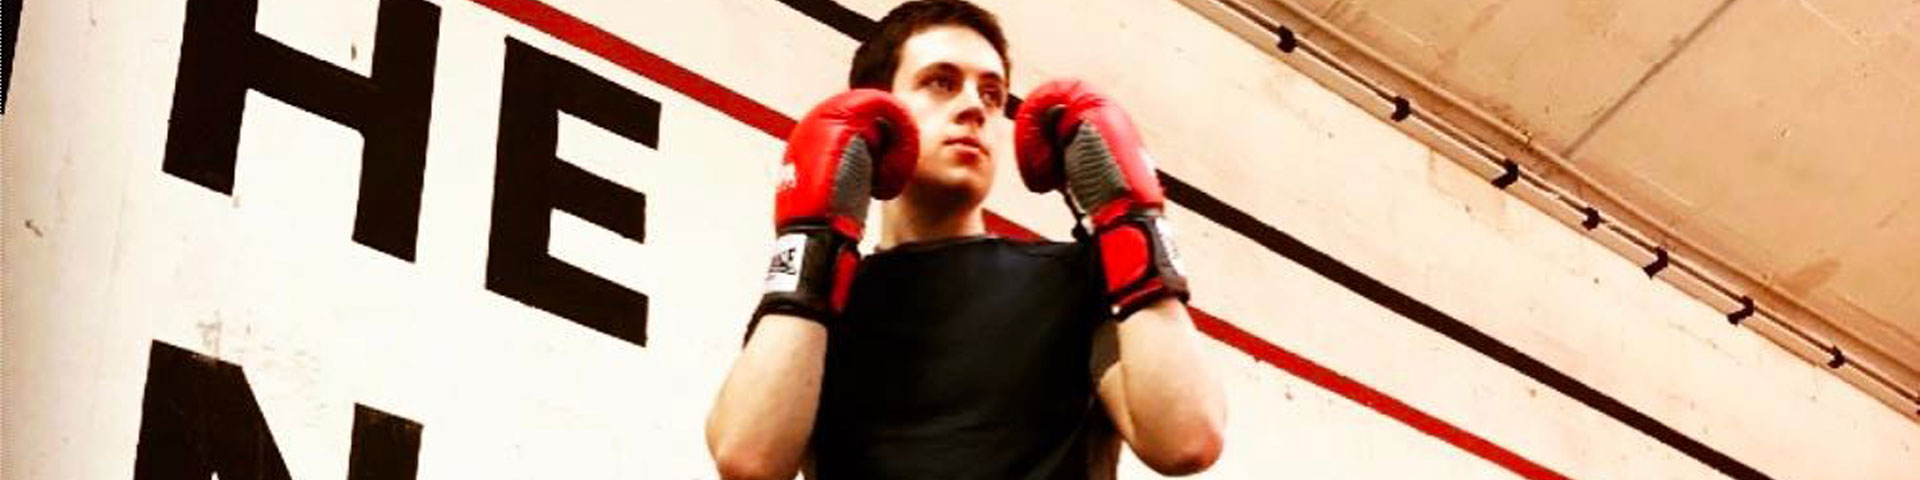 Oliver Stockton boxing